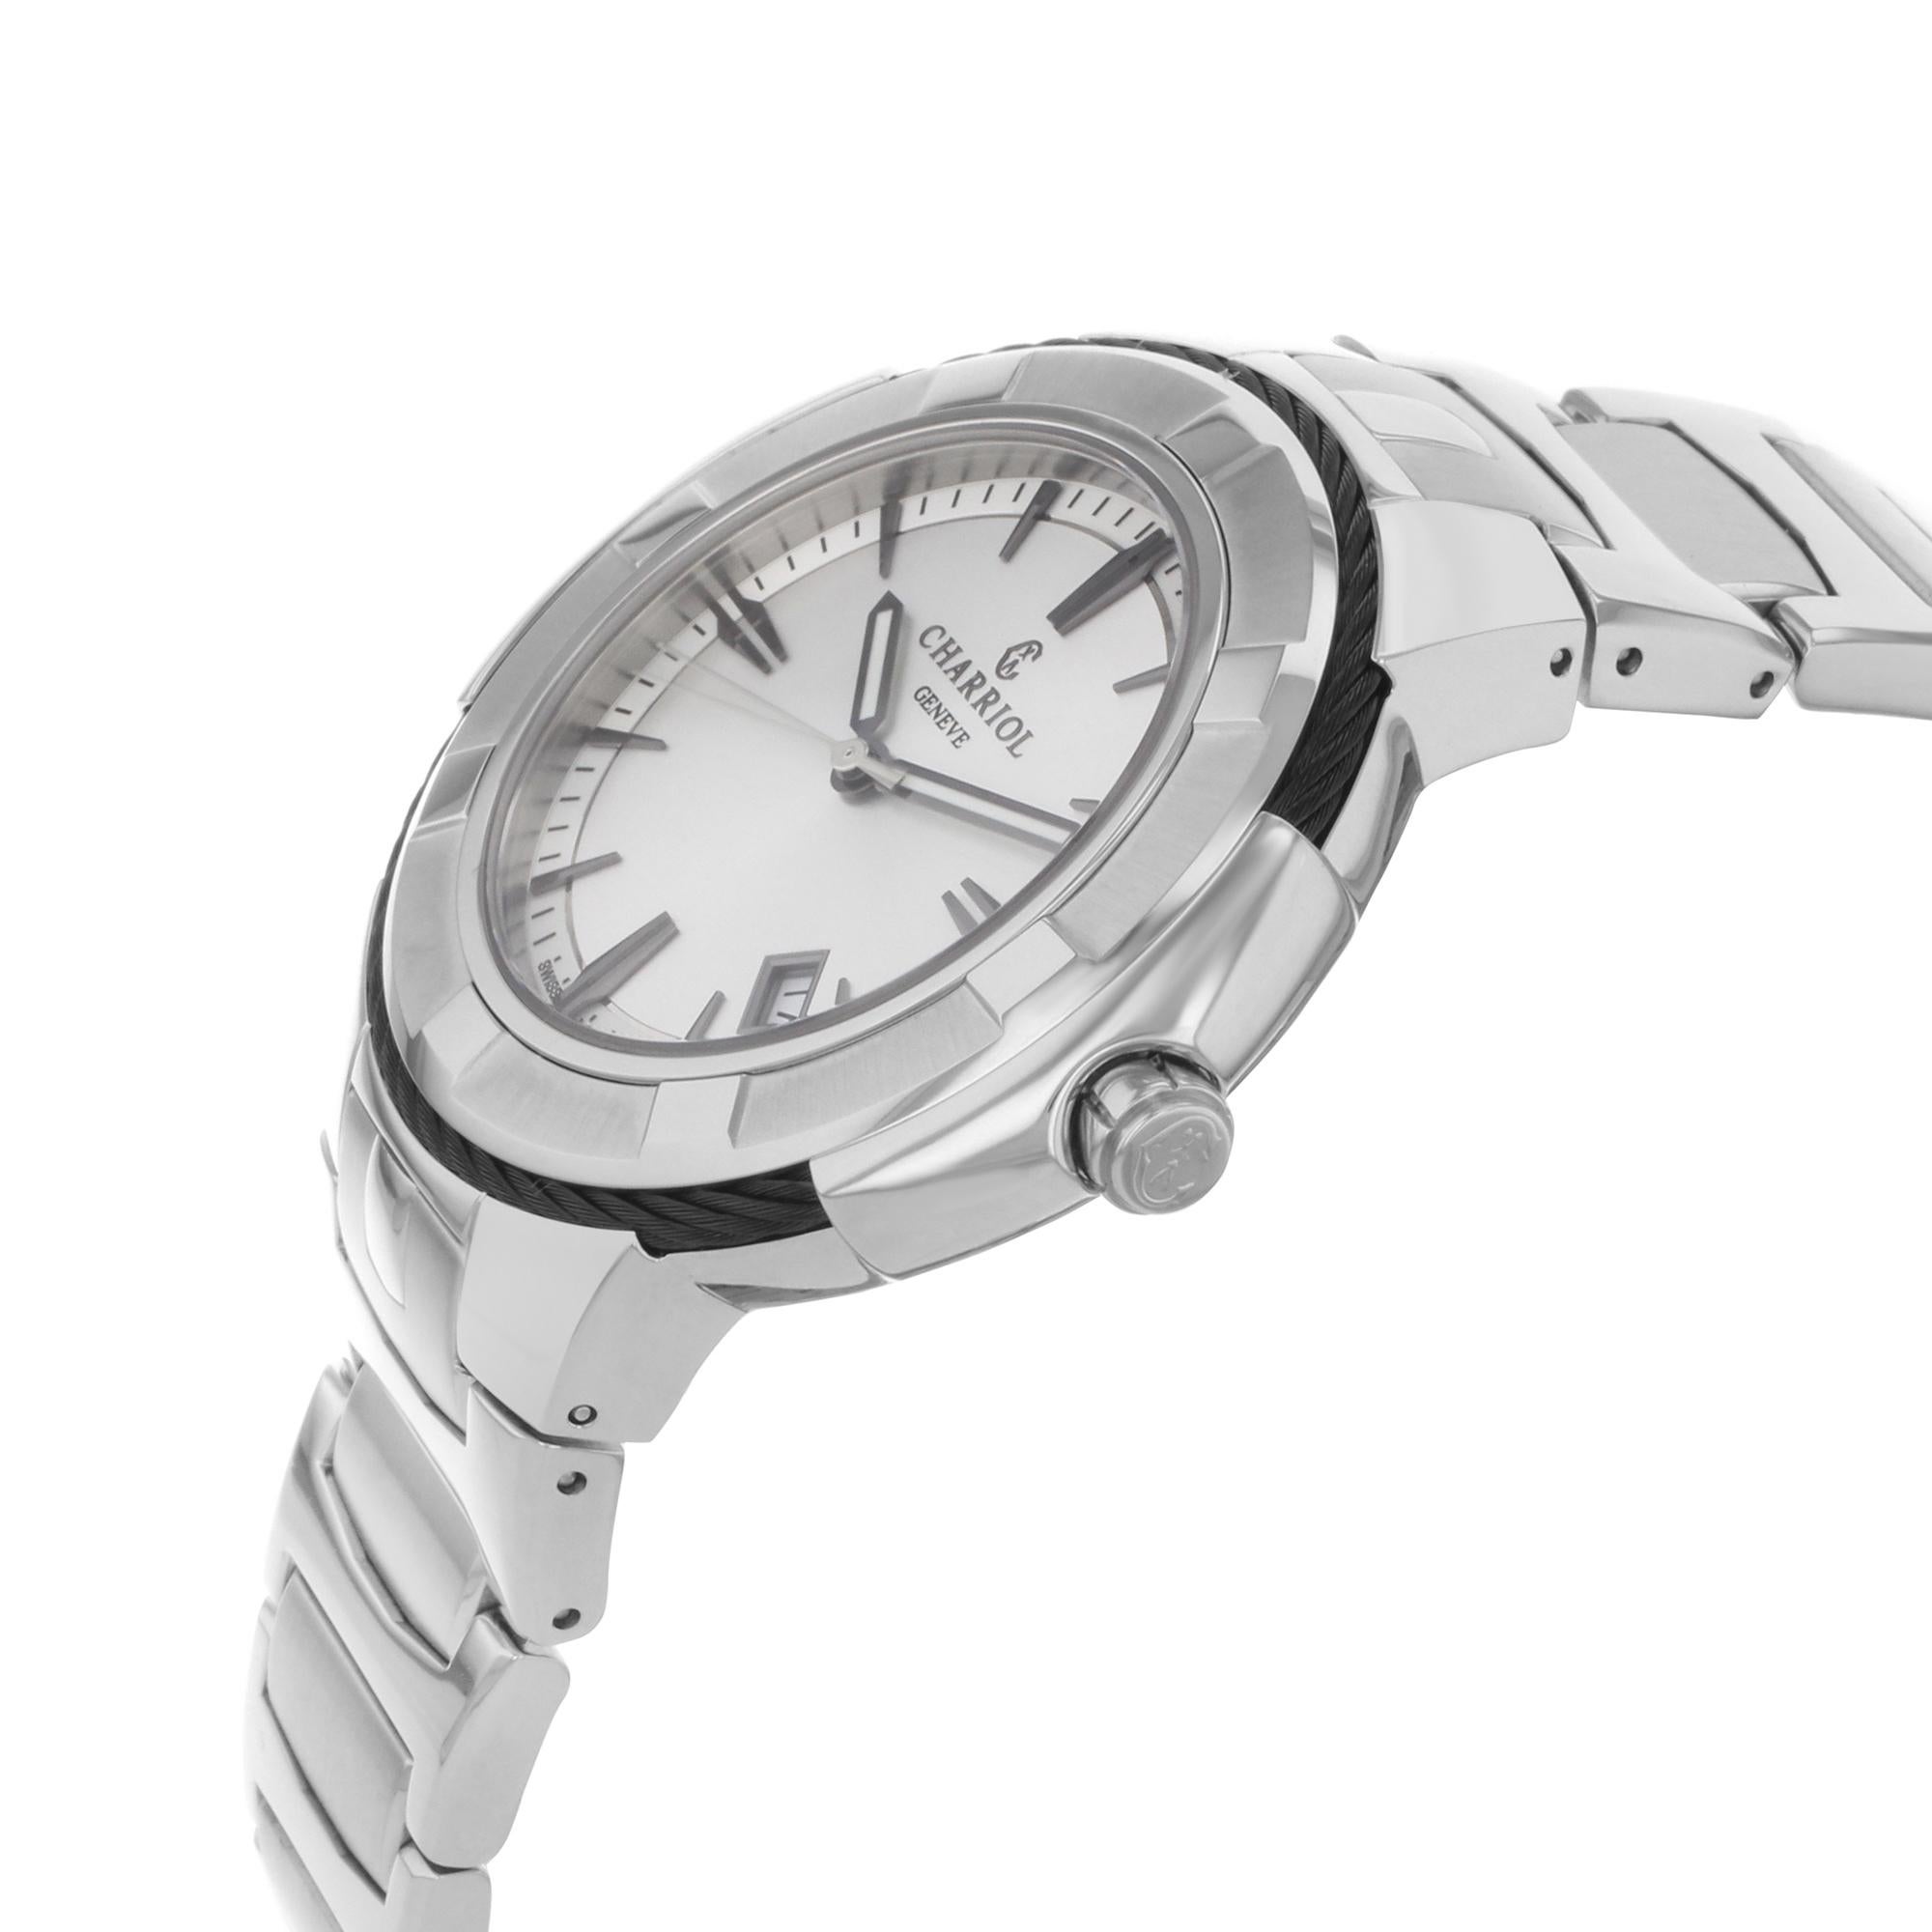 gucci 8032 watch price